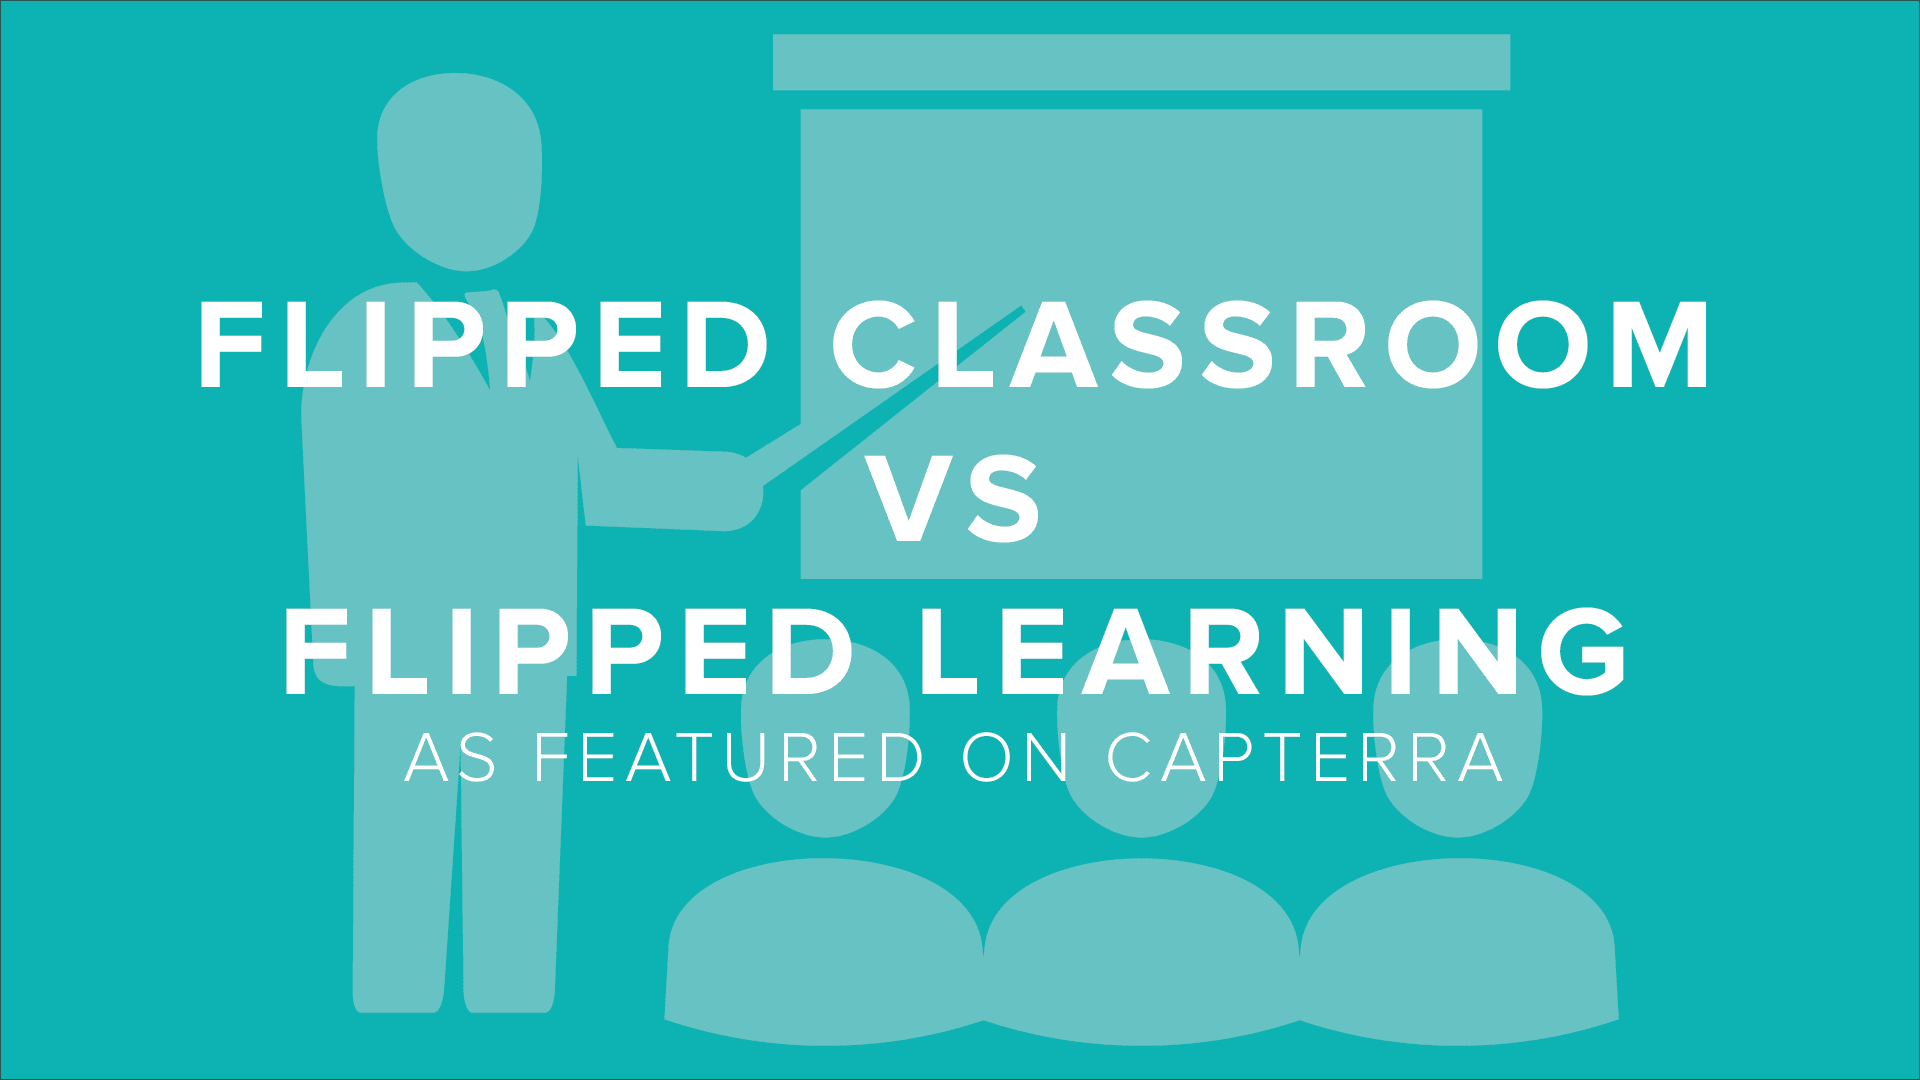 As Featured on Capterra: Flipped Classroom vs Flipped Learning | DigitalChalk